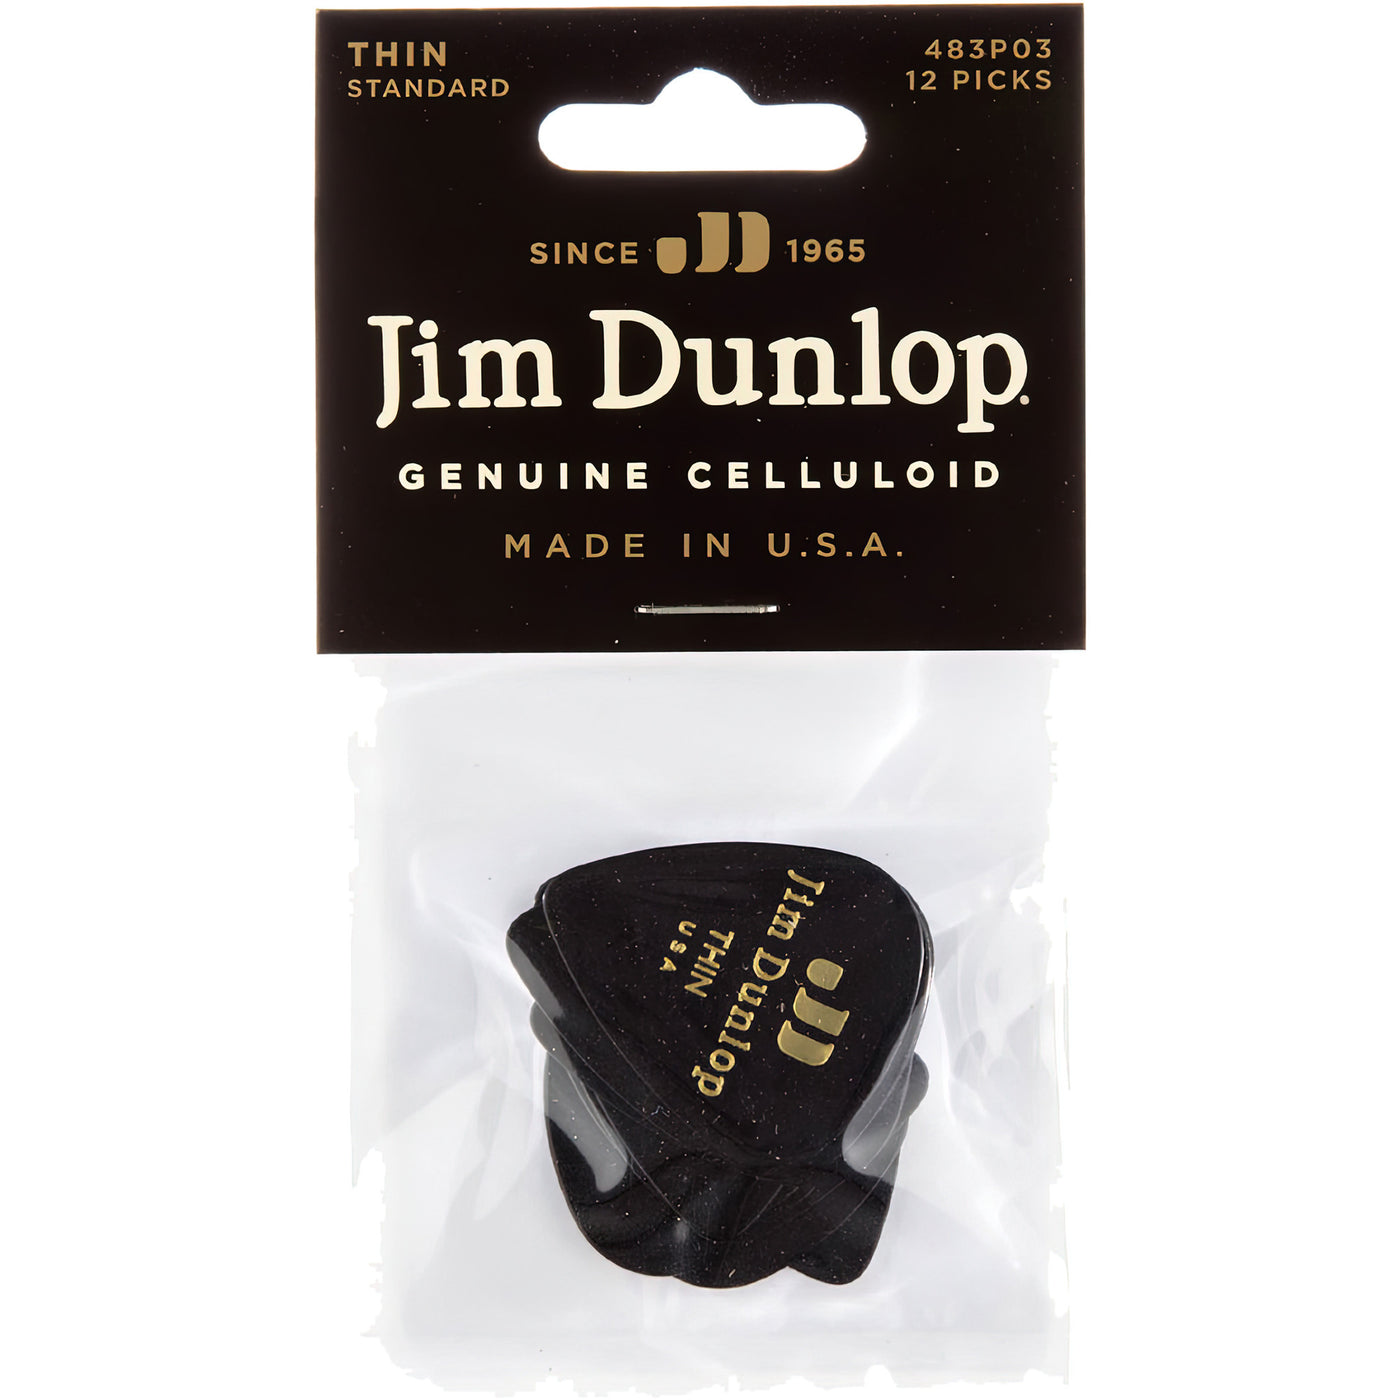 Dunlop Celluloid Standard Guitar Picks, Black, Thin, 12-Pack (483P03TH)